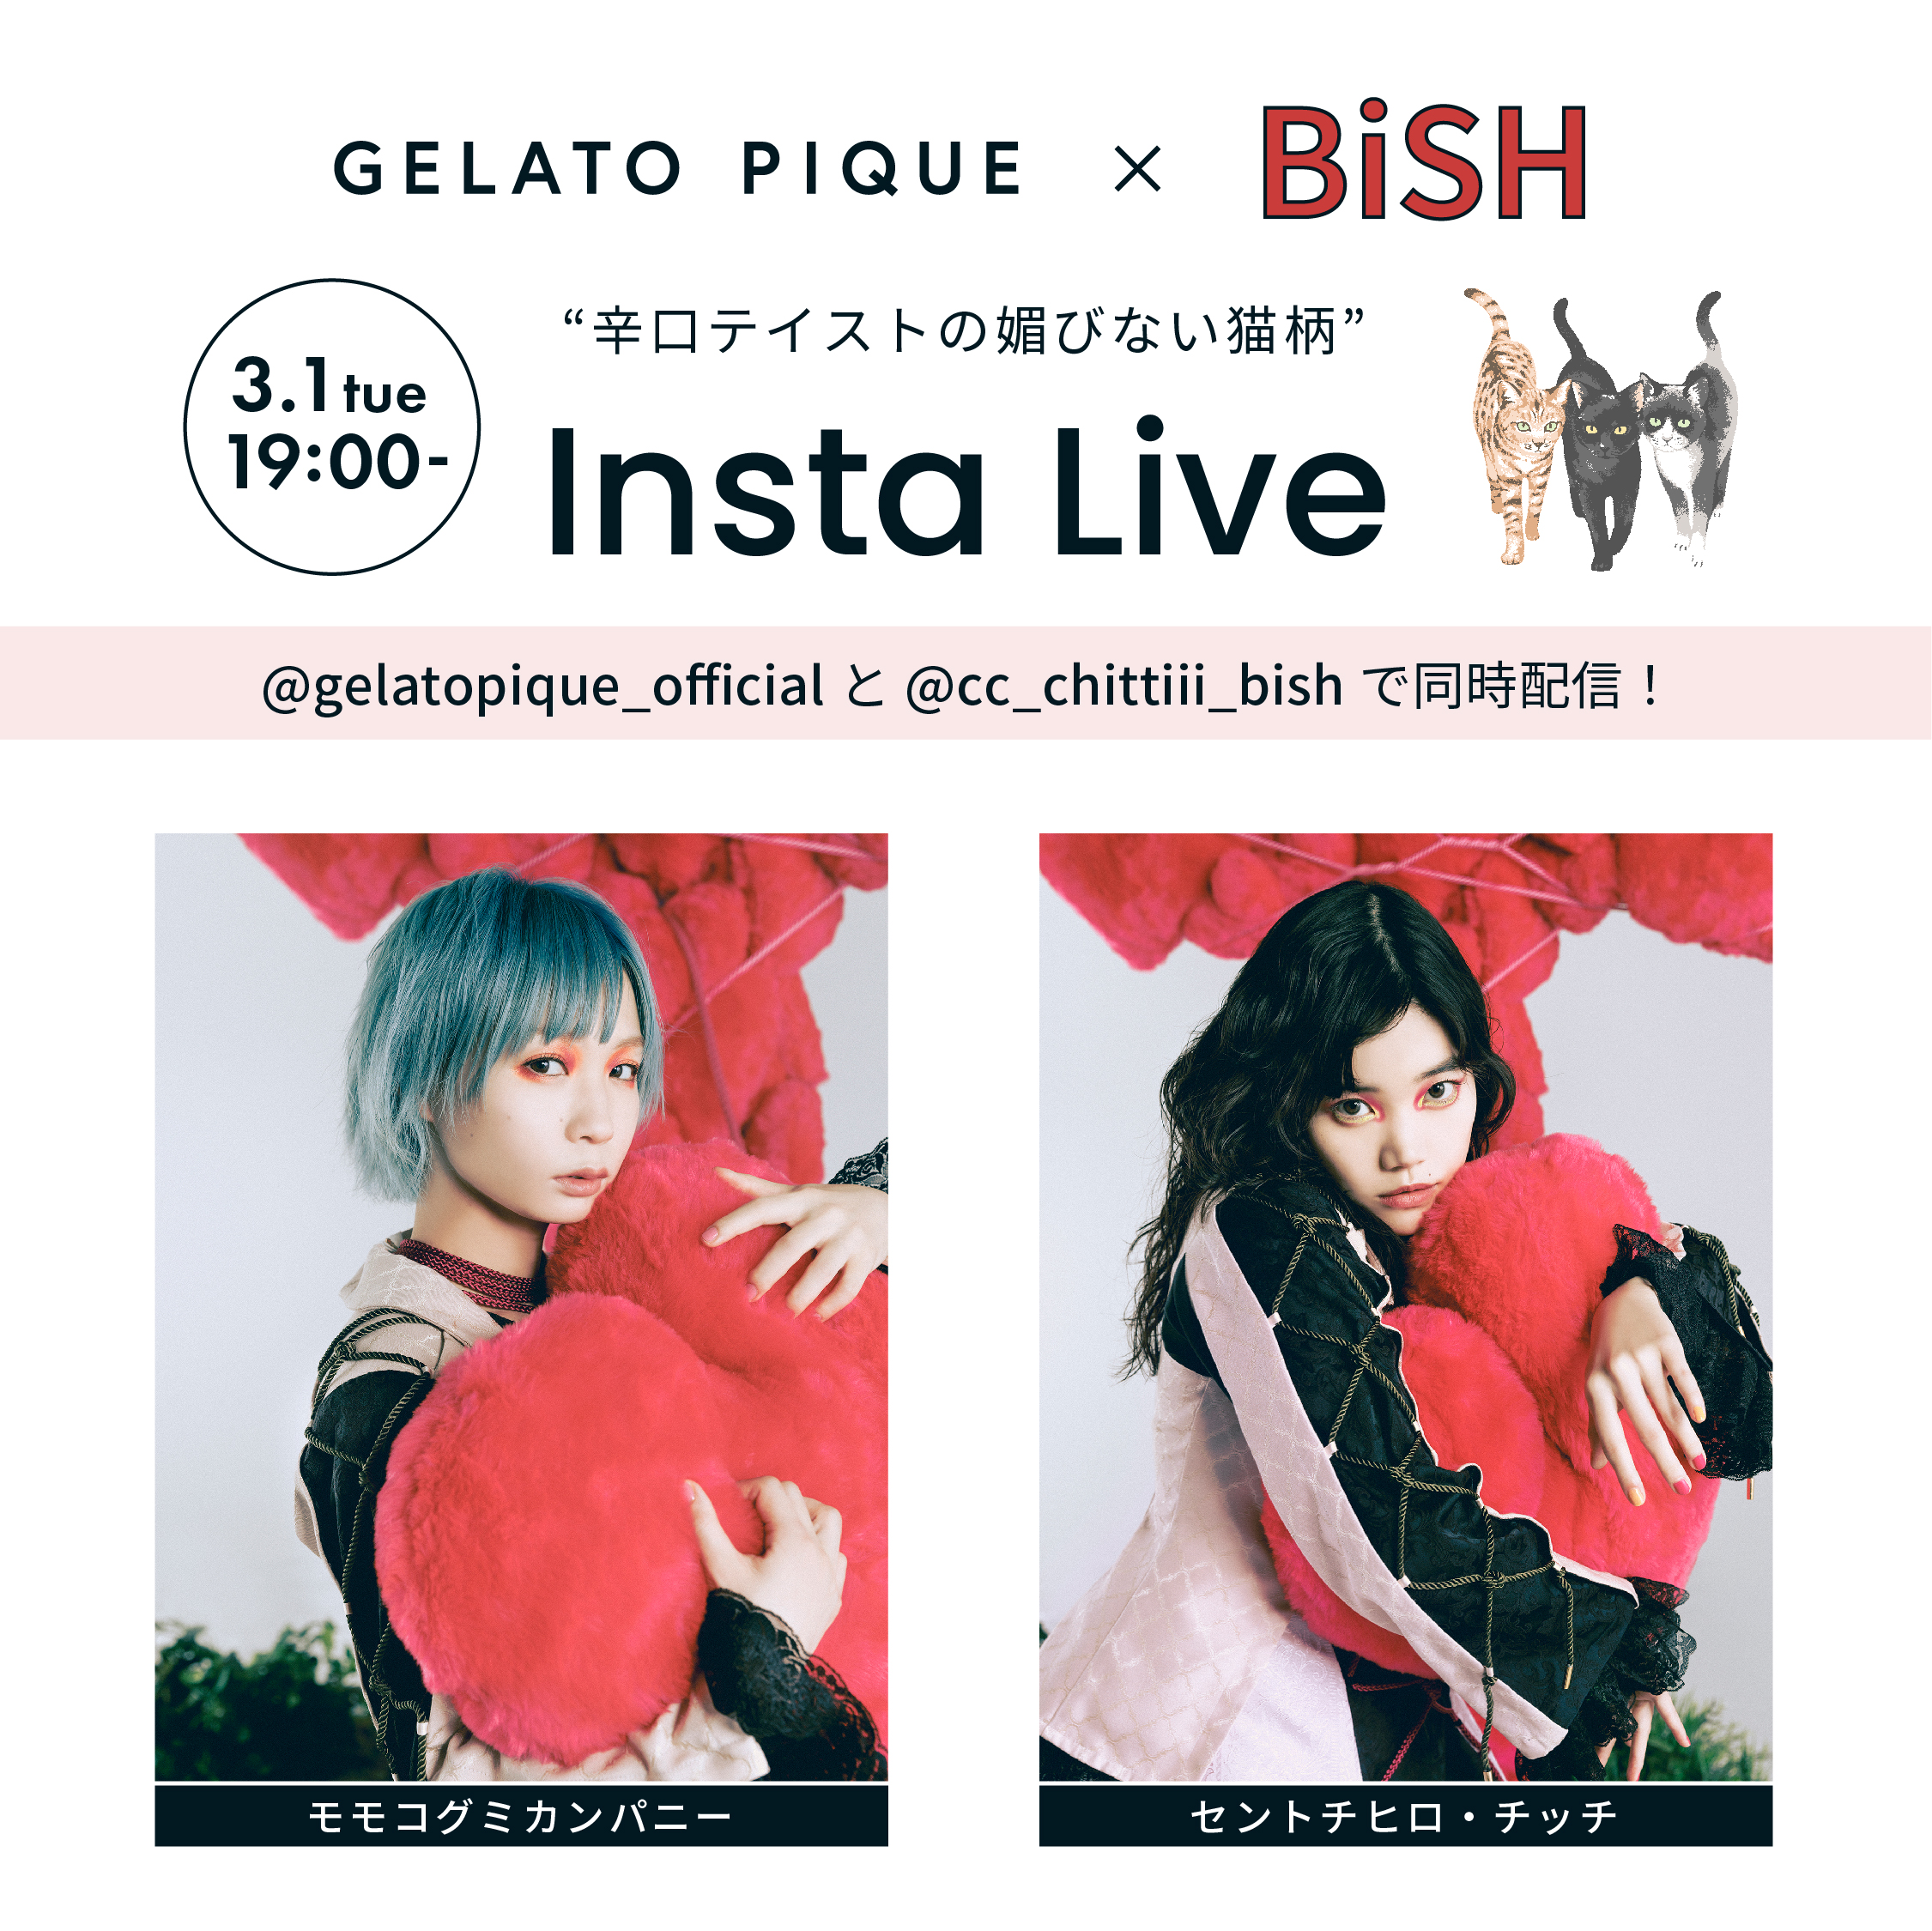 Insta Live 3/1 (TUE) 19:00〜【GELATO PIQUE × BiSH】